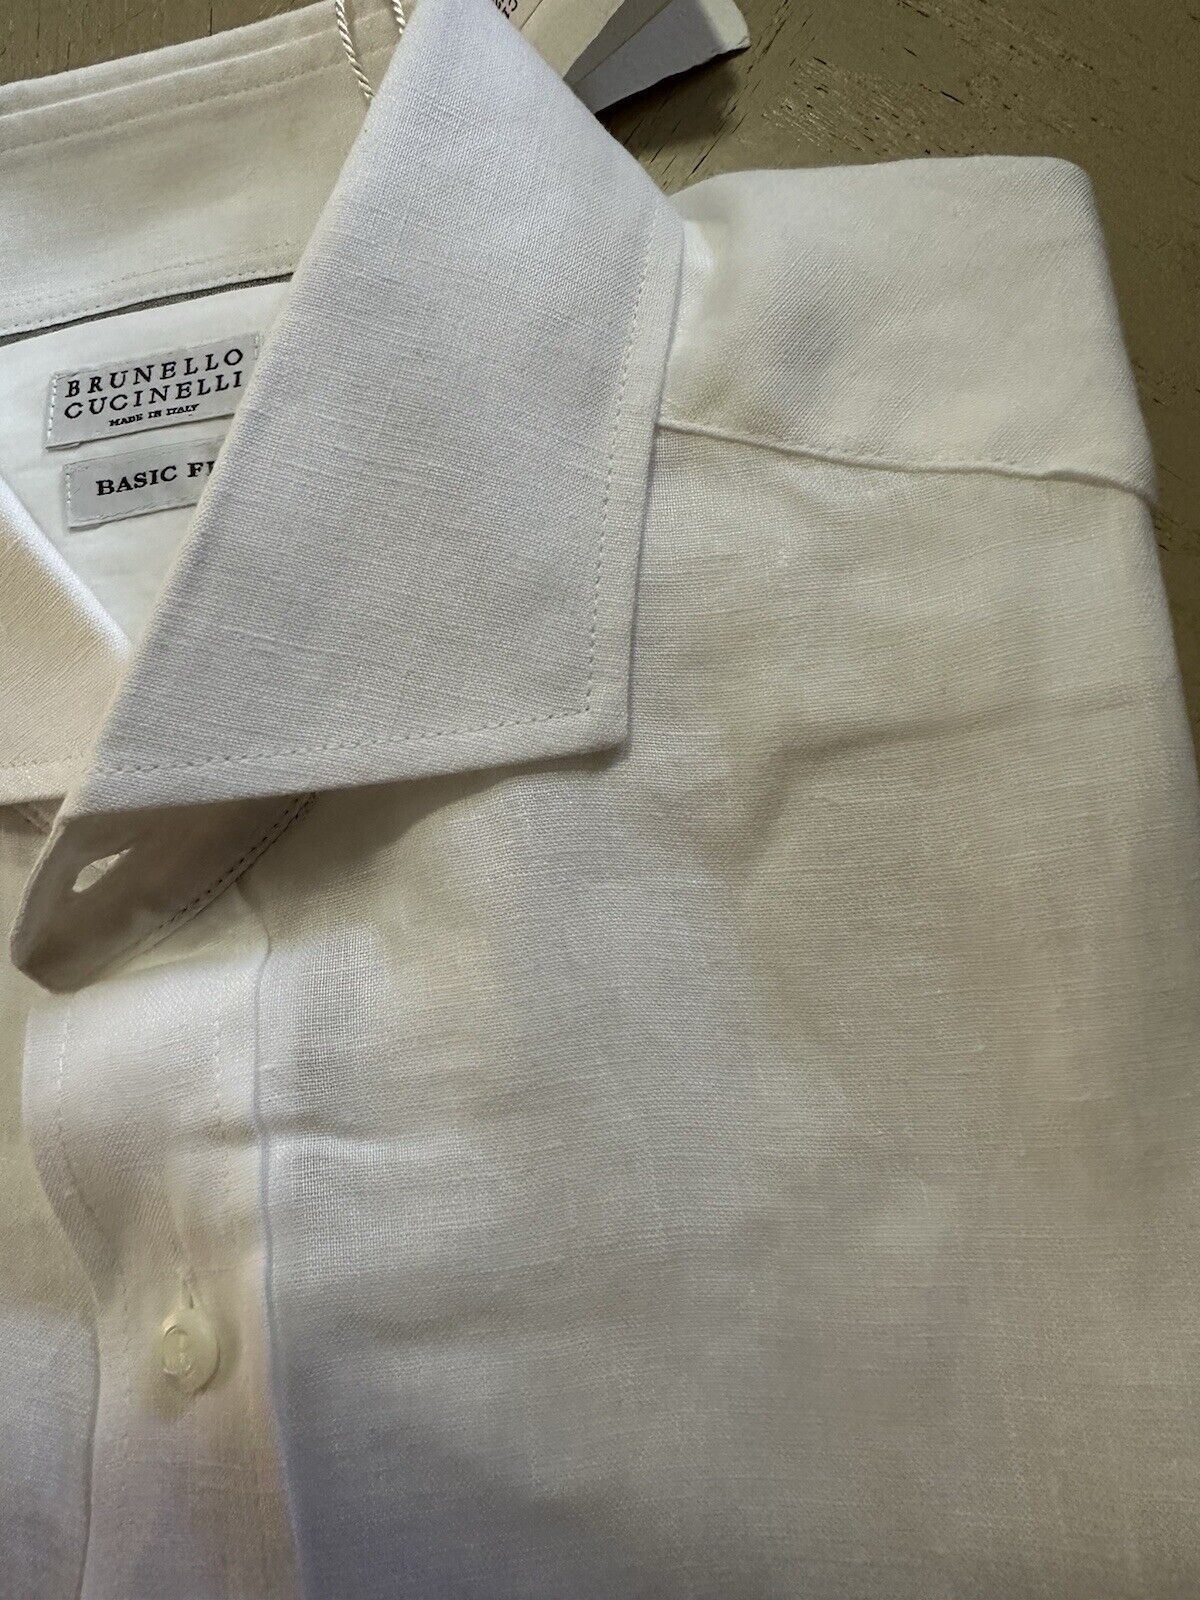 Brunello Cucinelli Men’s Basic Fit Linen Button-Front Shirt White XL New $695